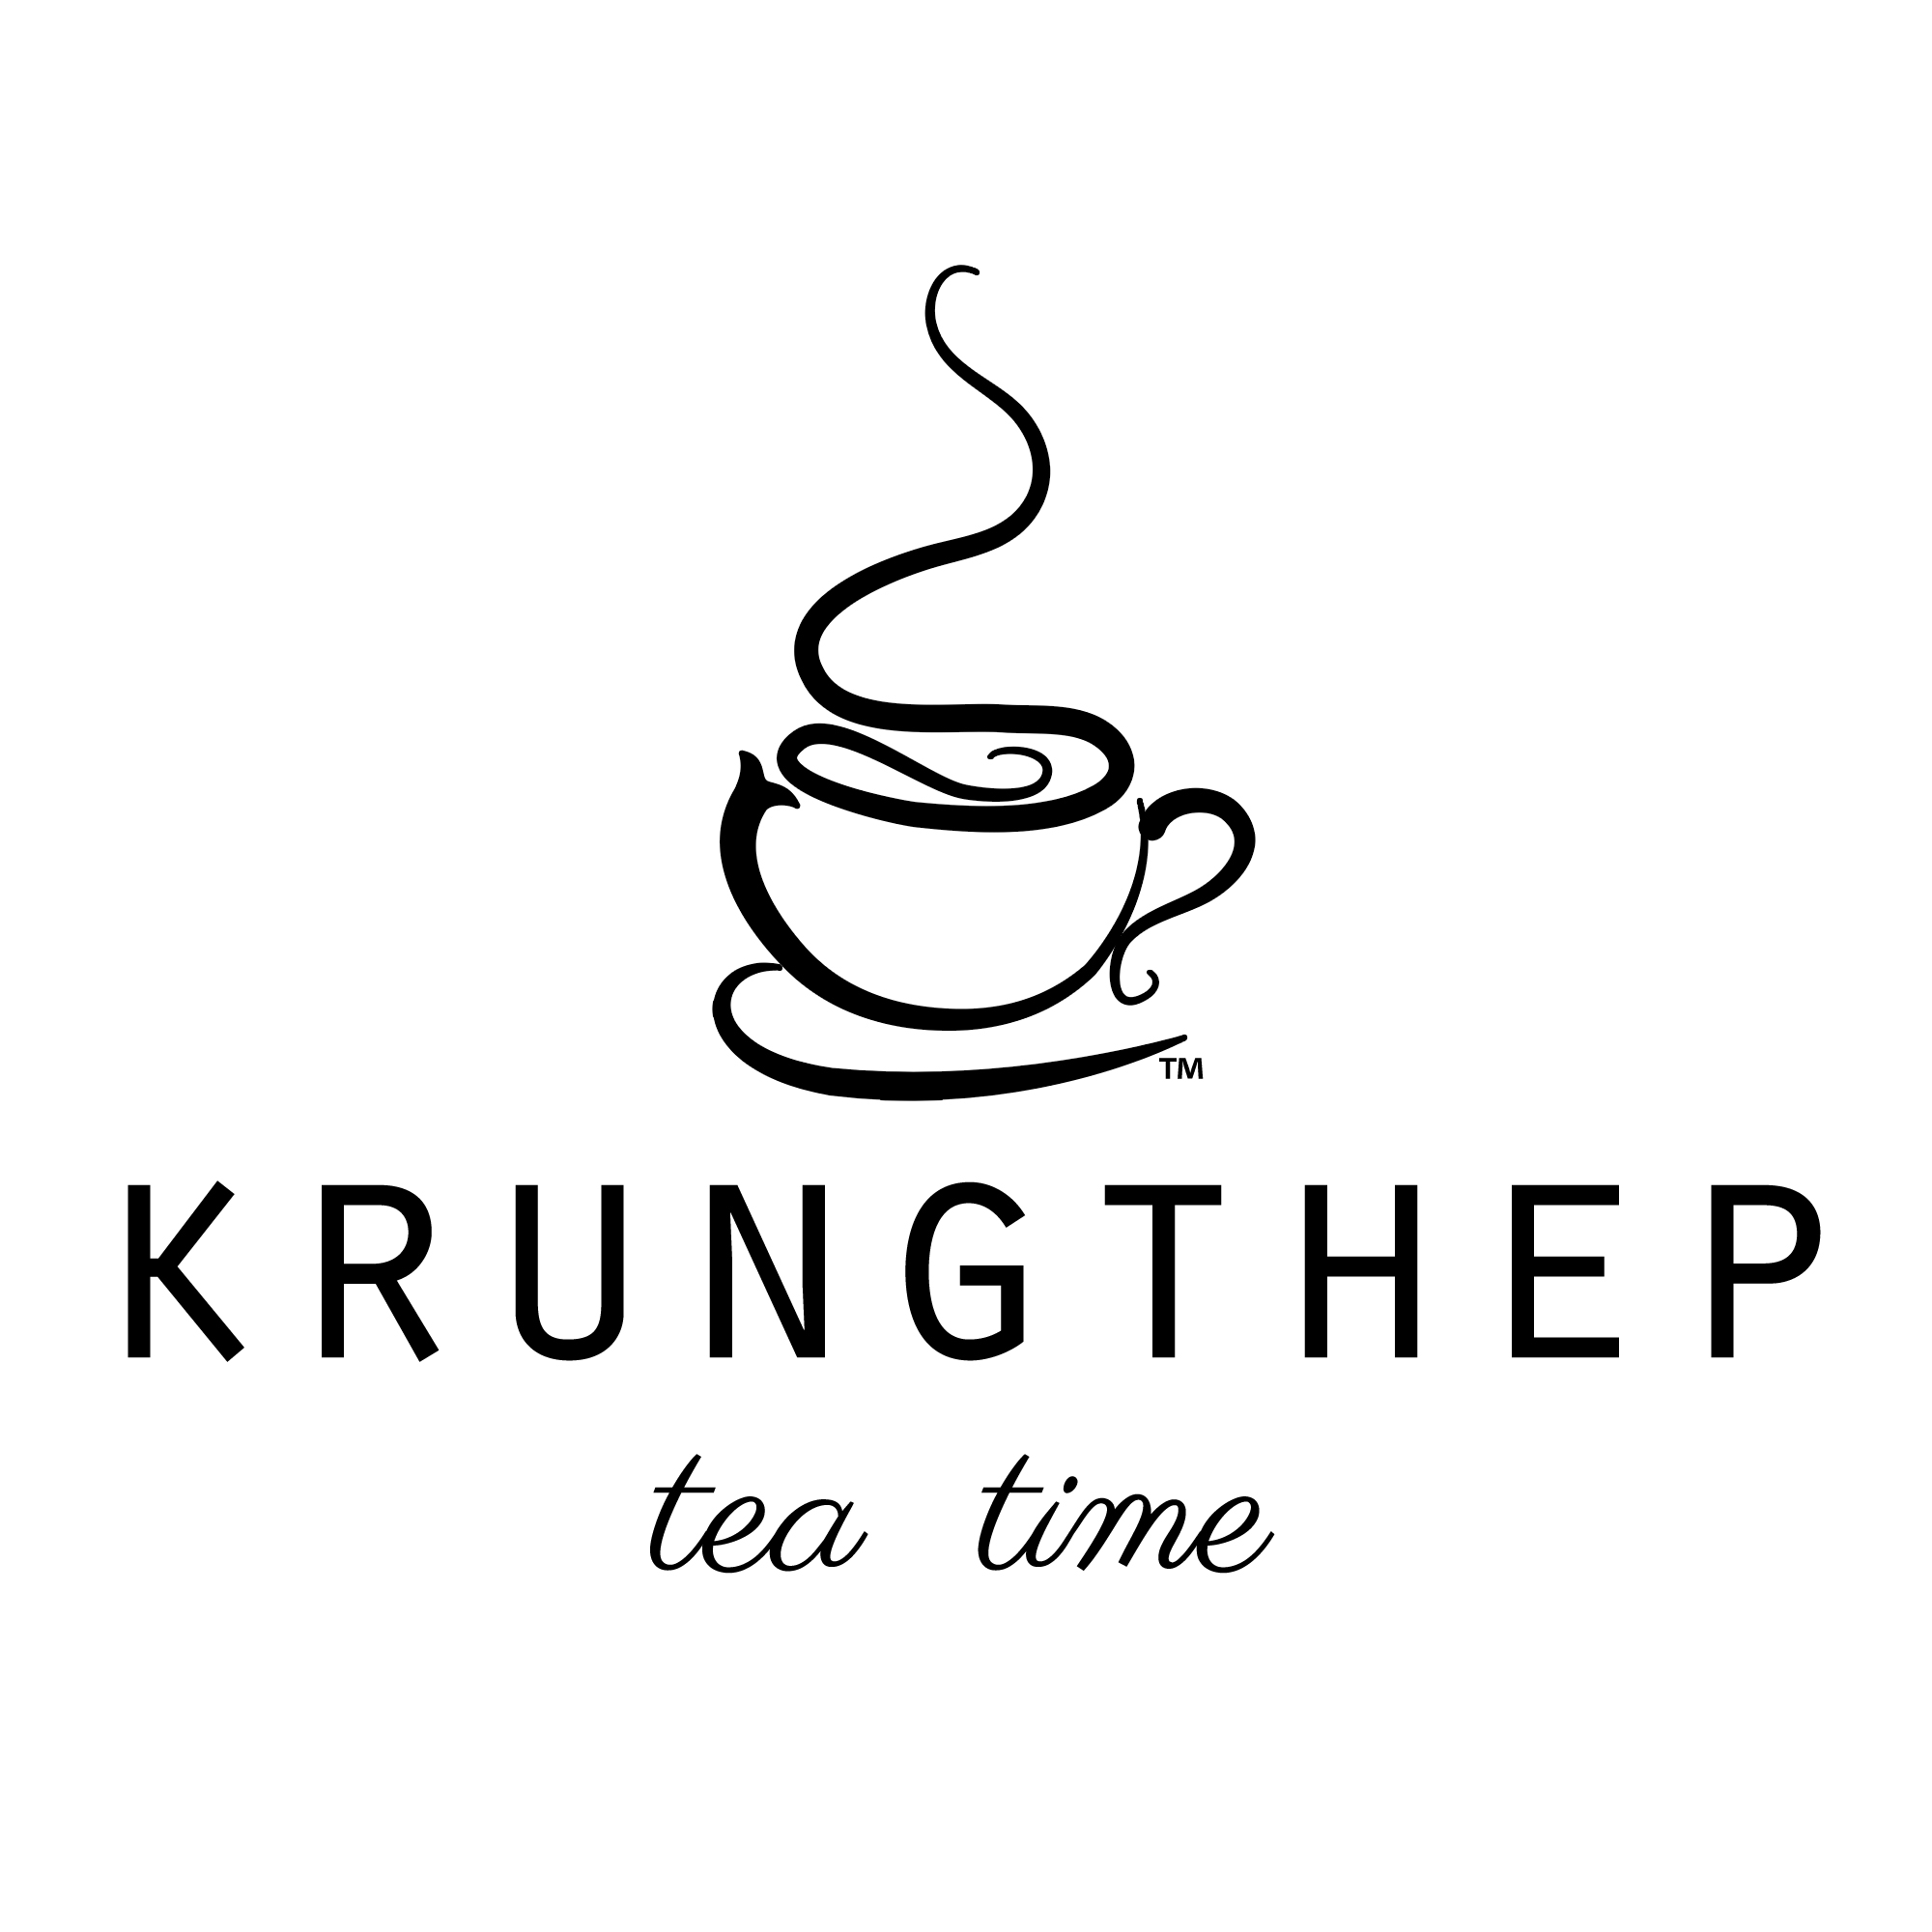 Tea Franchise in Hyderabad | Best Tea Franchise in India